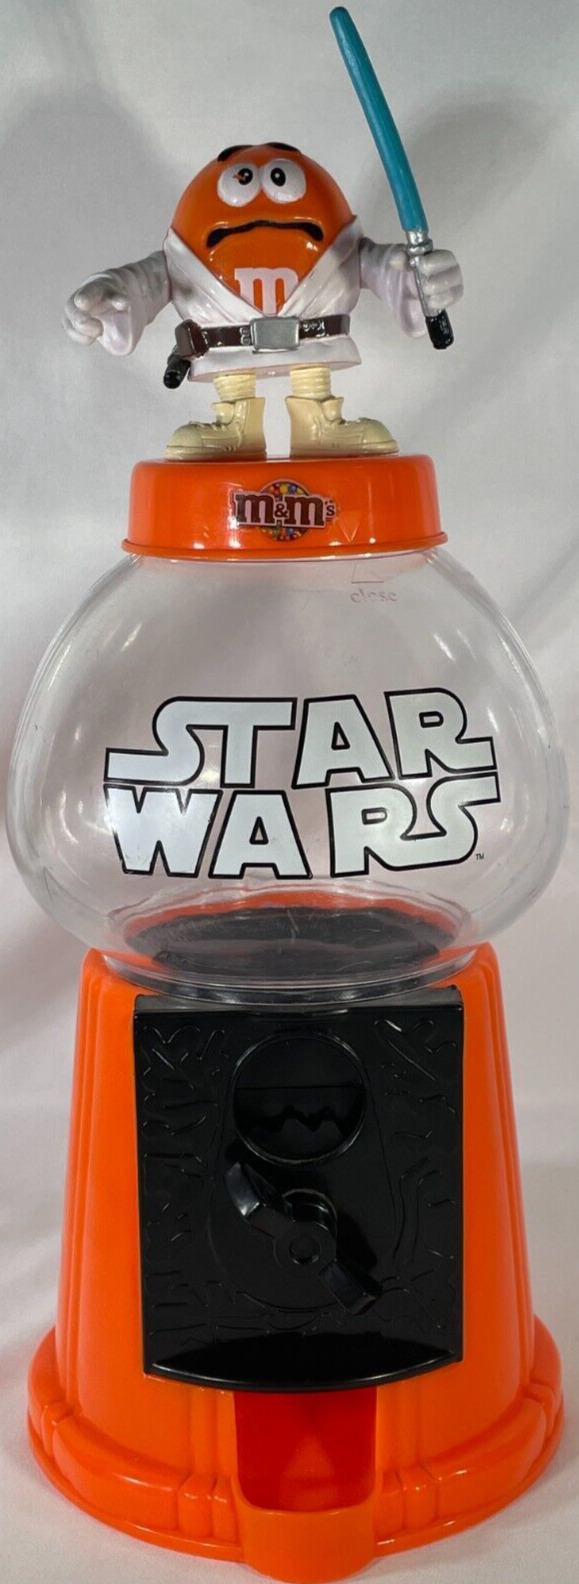 Star Wars M&Ms Candy Gumball Dispenser Orange M&M as Luke Skywalker